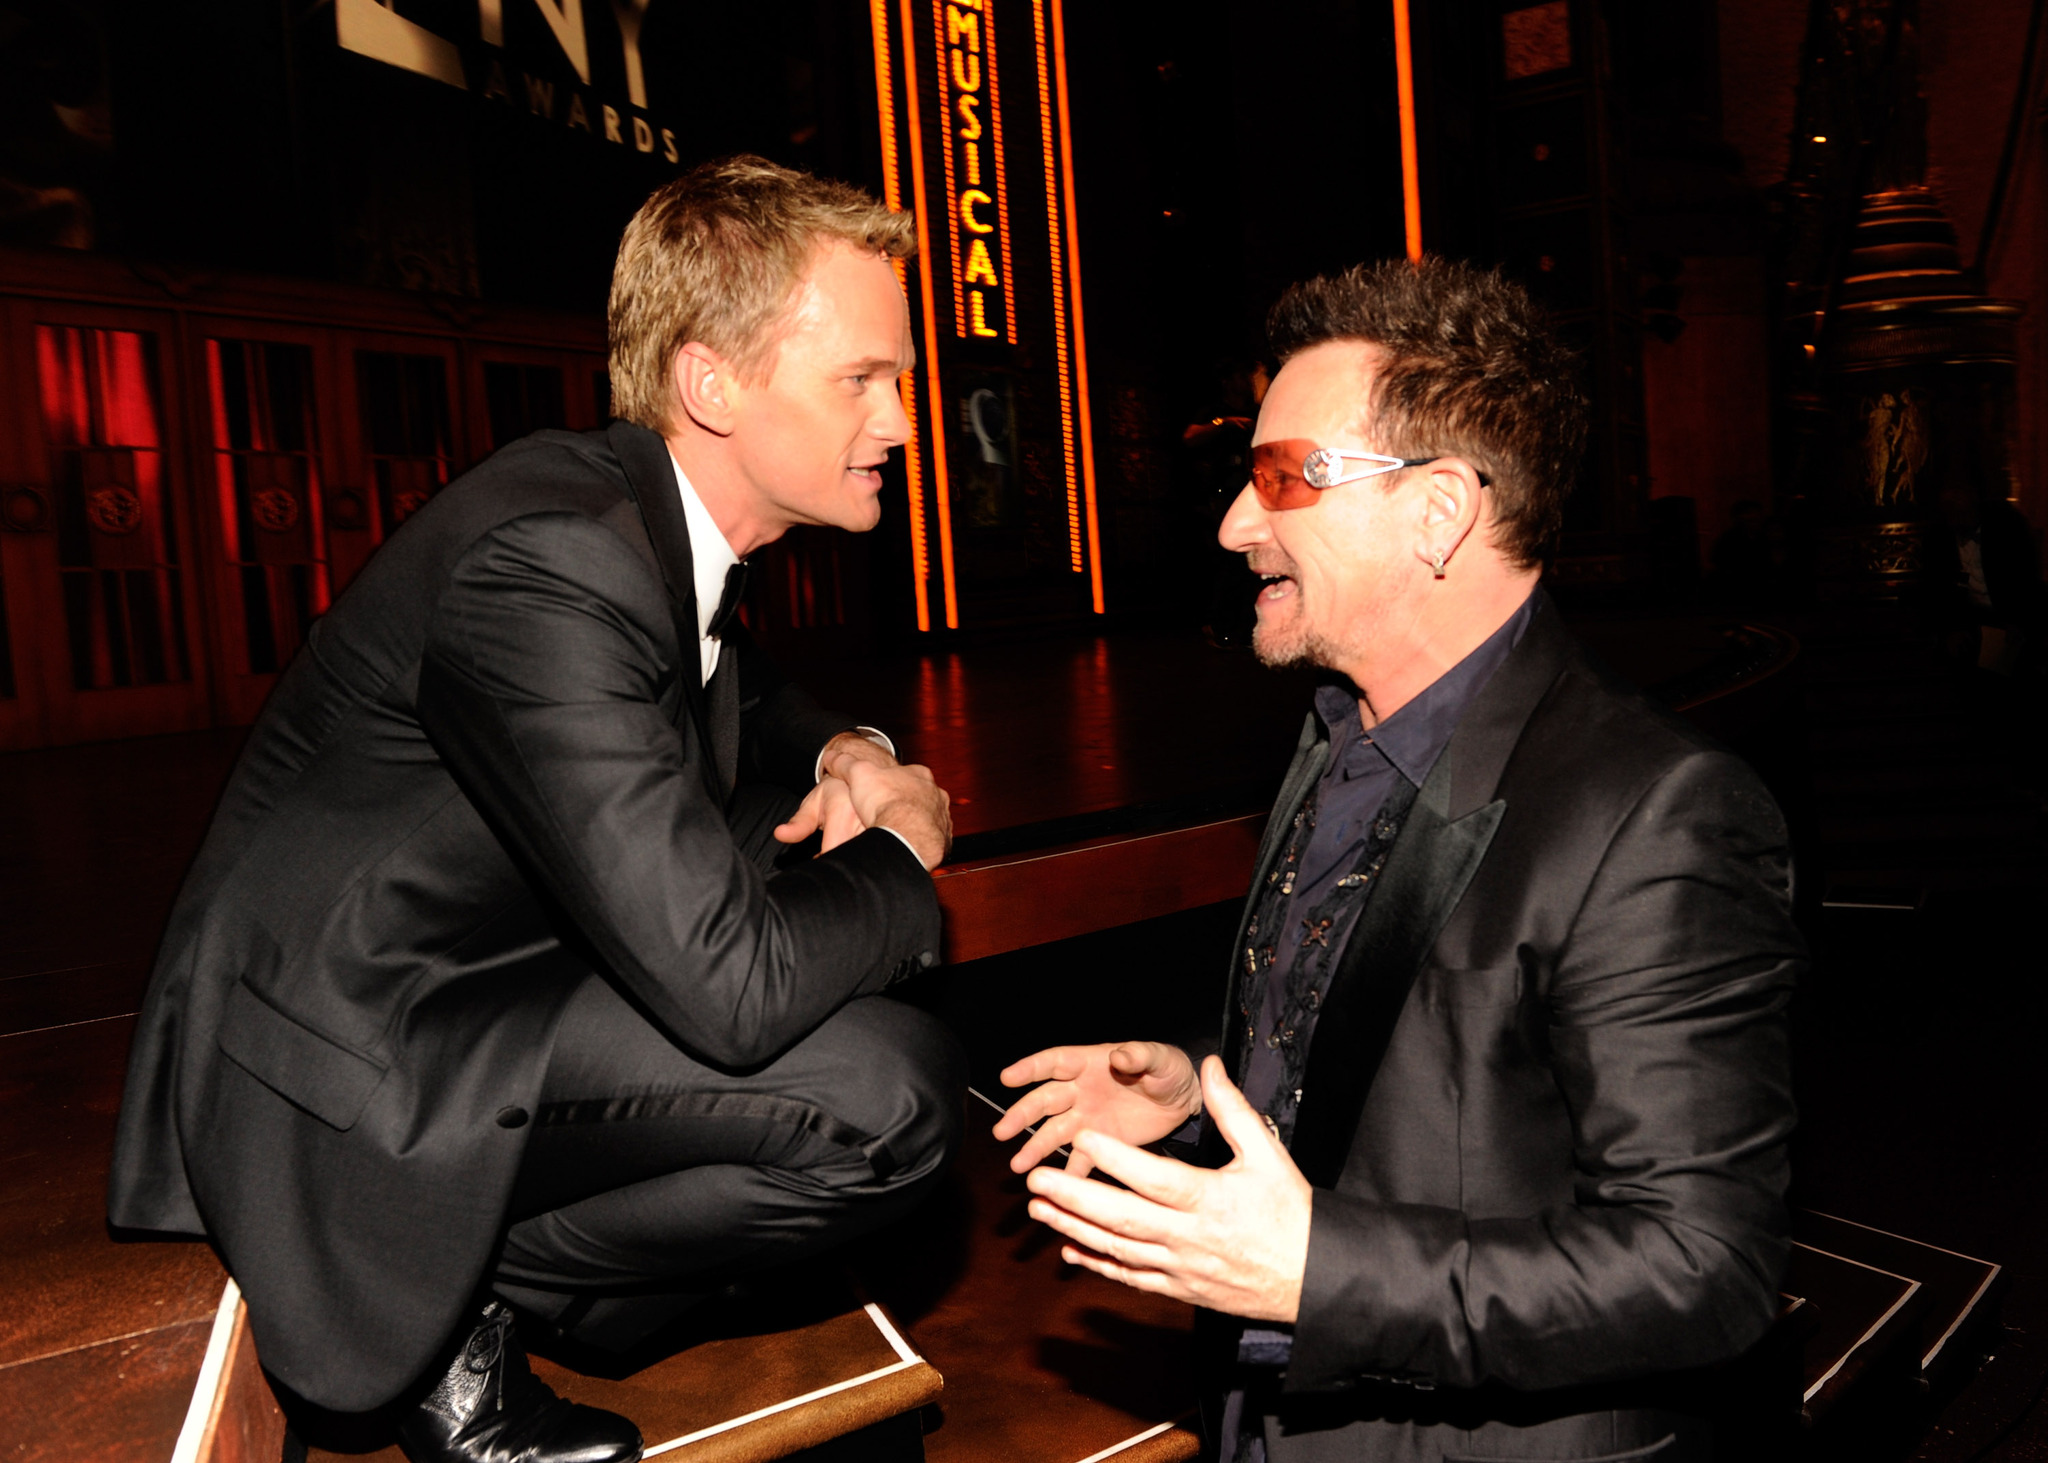 Neil Patrick Harris and Bono